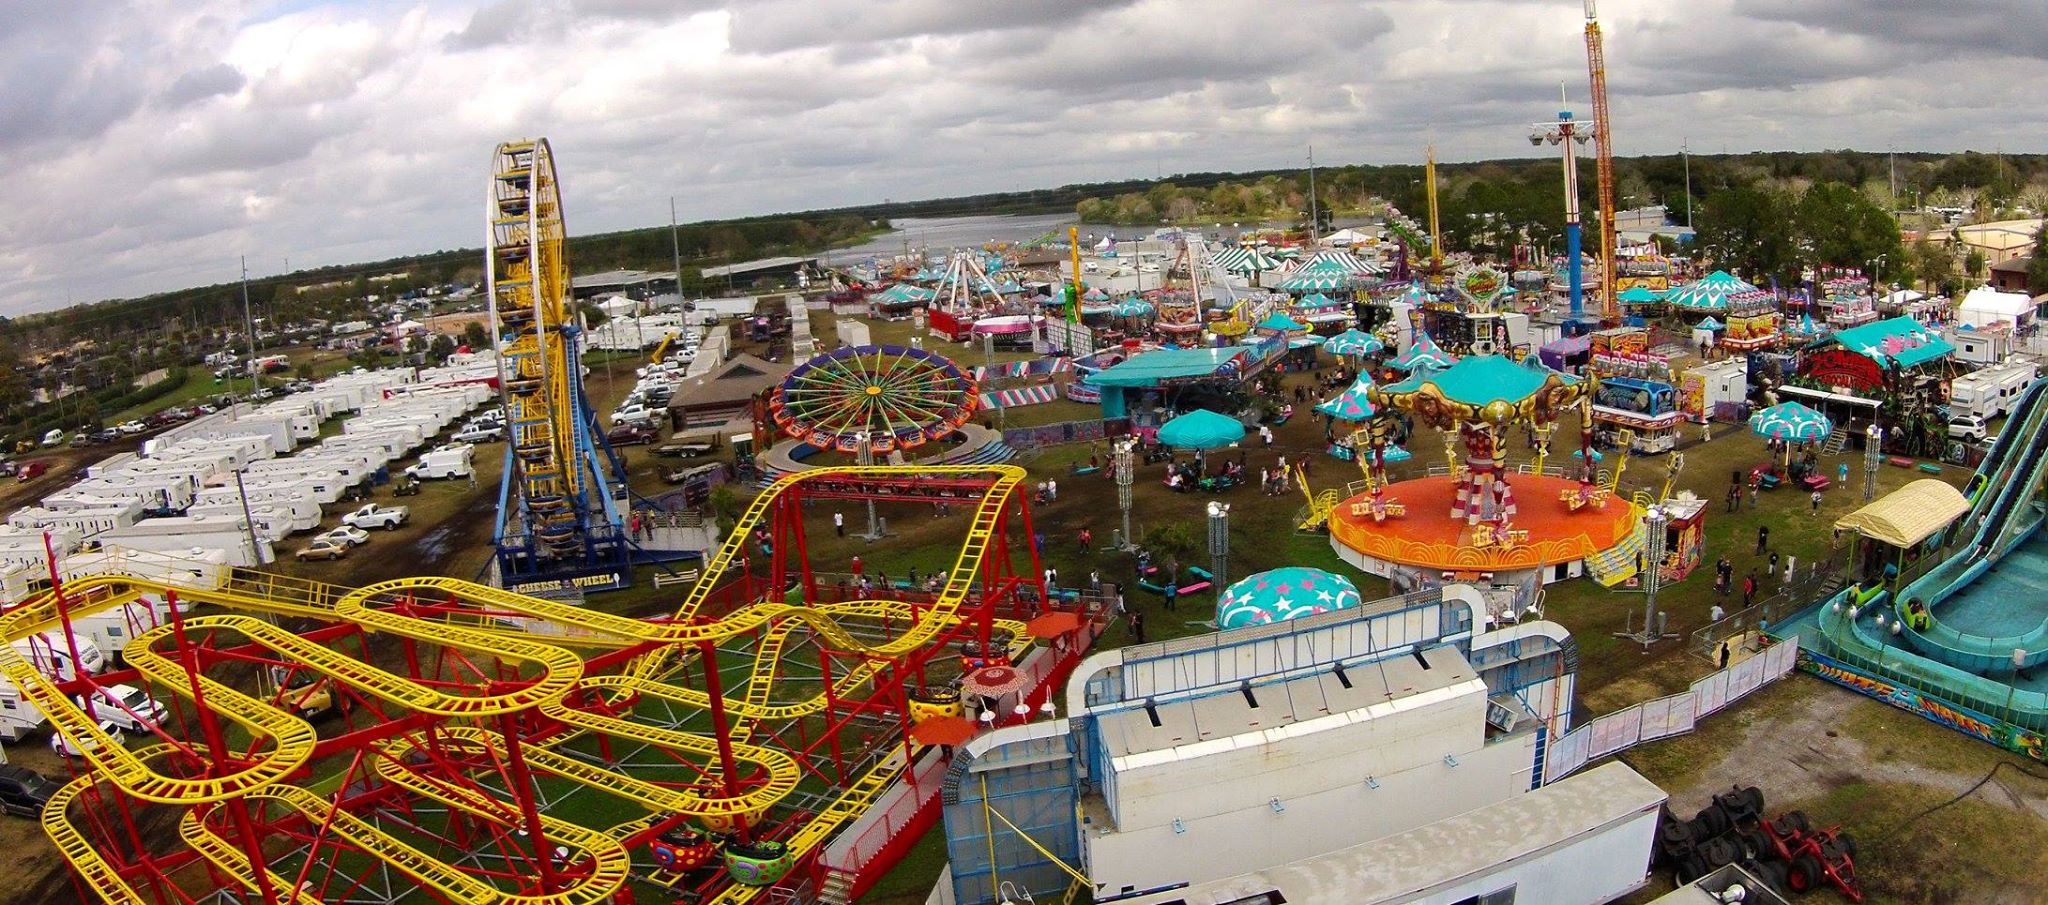 Central Florida Fair, Orlando FL, February 26th through March 8th 2015